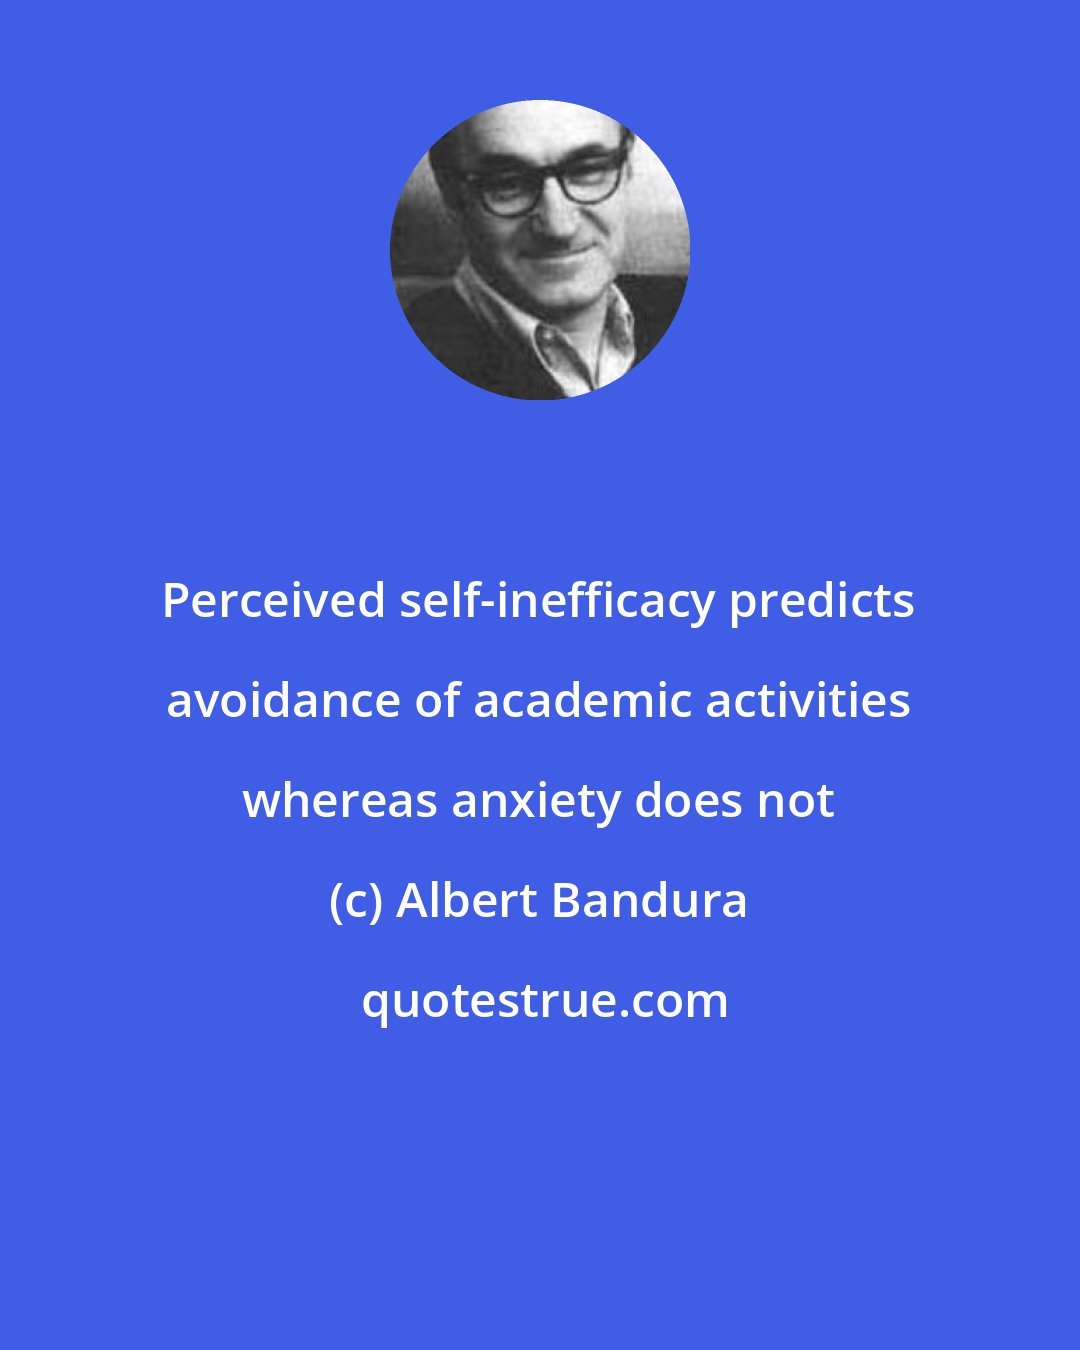 Albert Bandura: Perceived self-inefficacy predicts avoidance of academic activities whereas anxiety does not